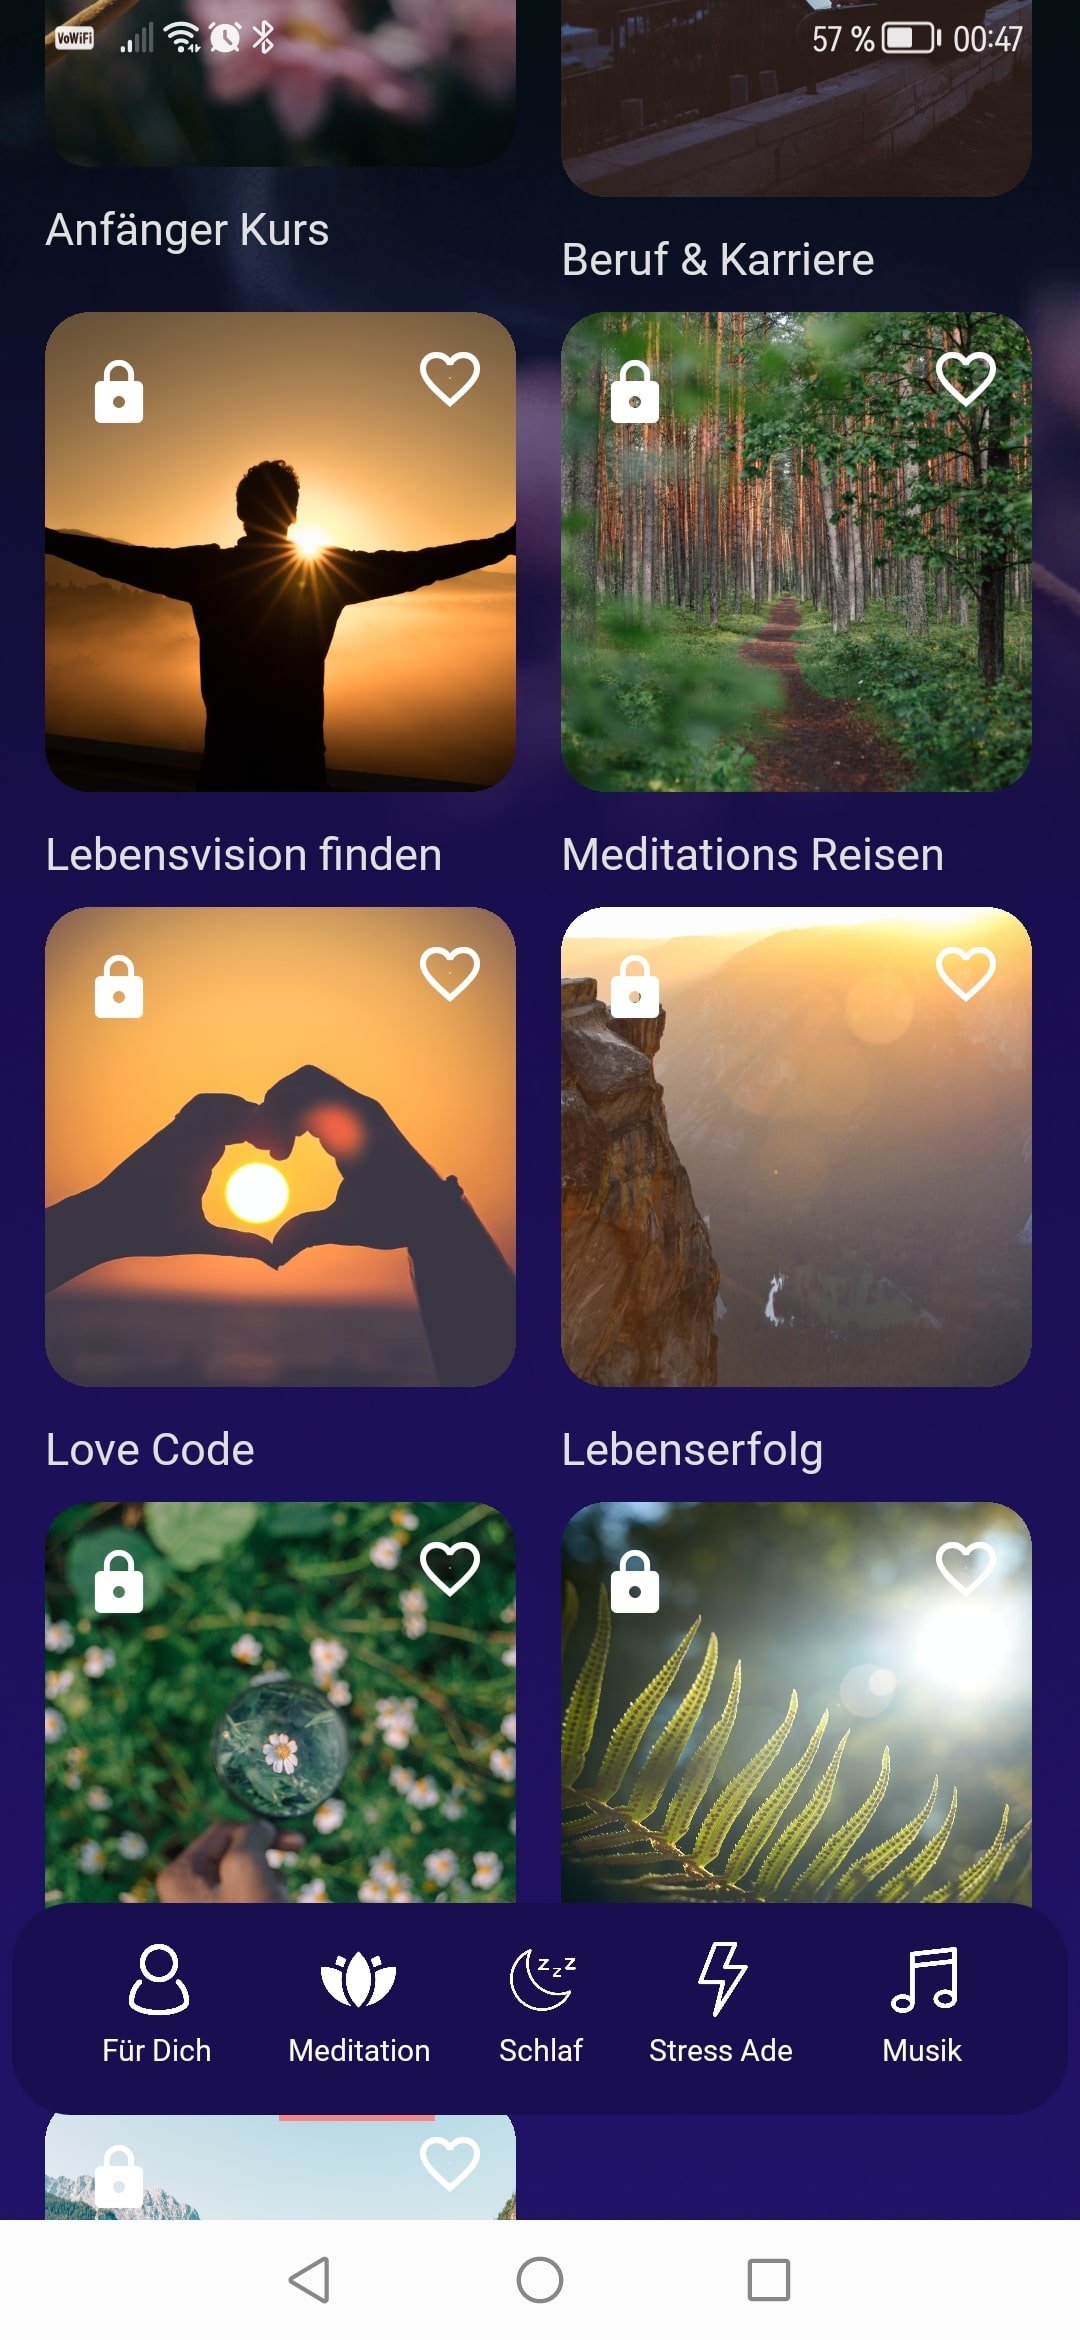 meditation Screenshots from the app